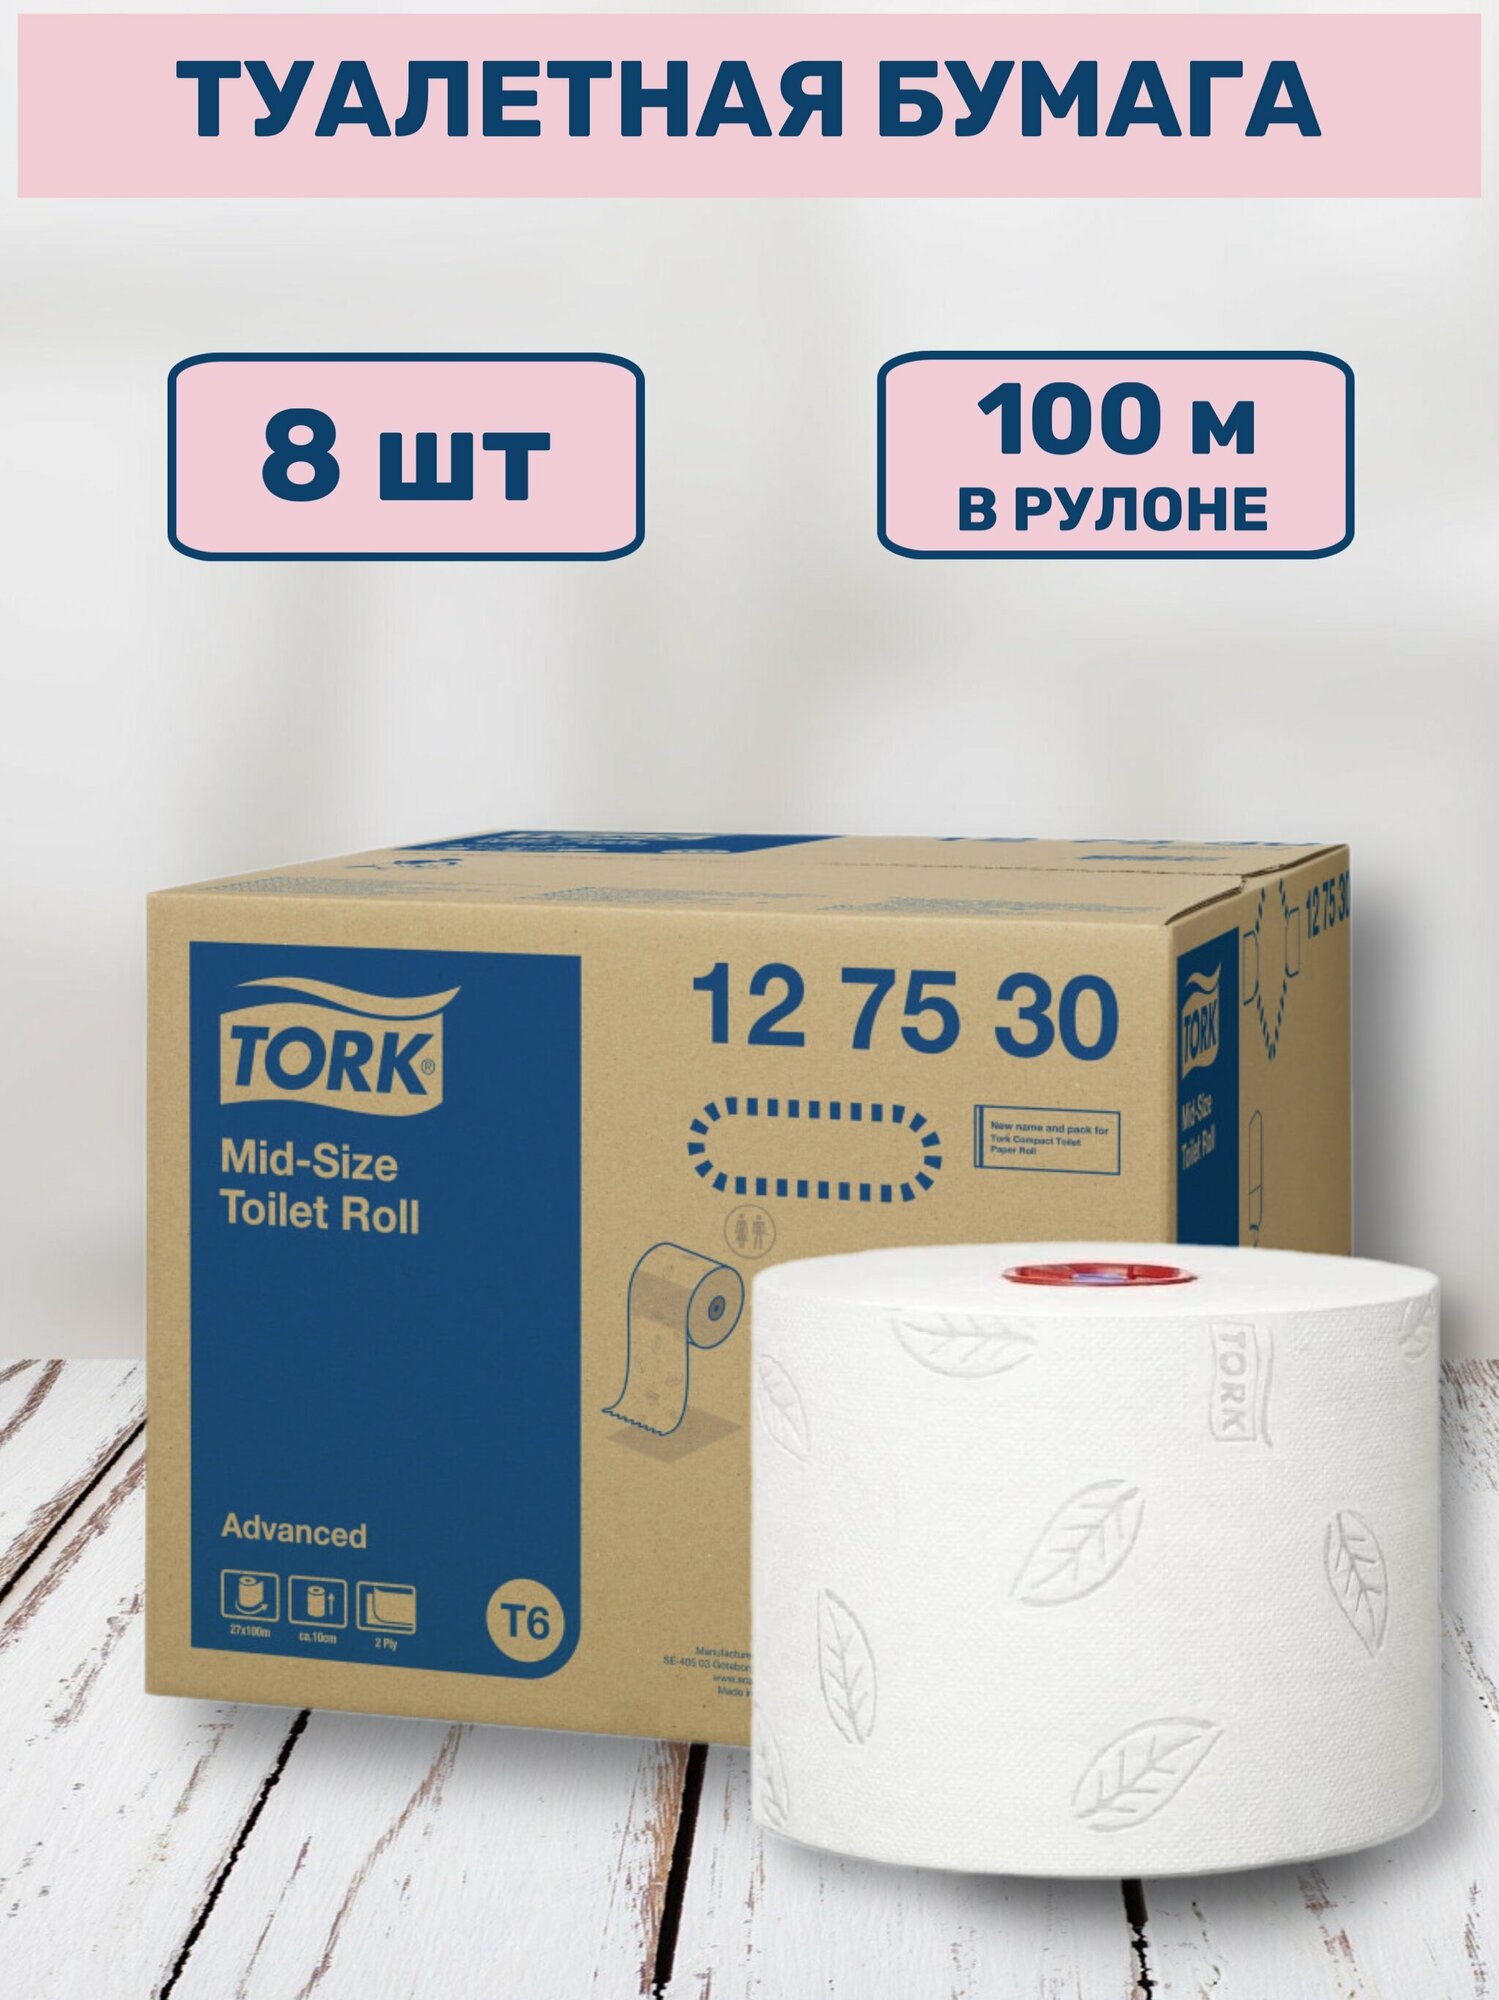 Бумага туалетная 100 м, TORK (Система Т6), комплект 8 шт, Advanced, 2-слойная, белая, 127530